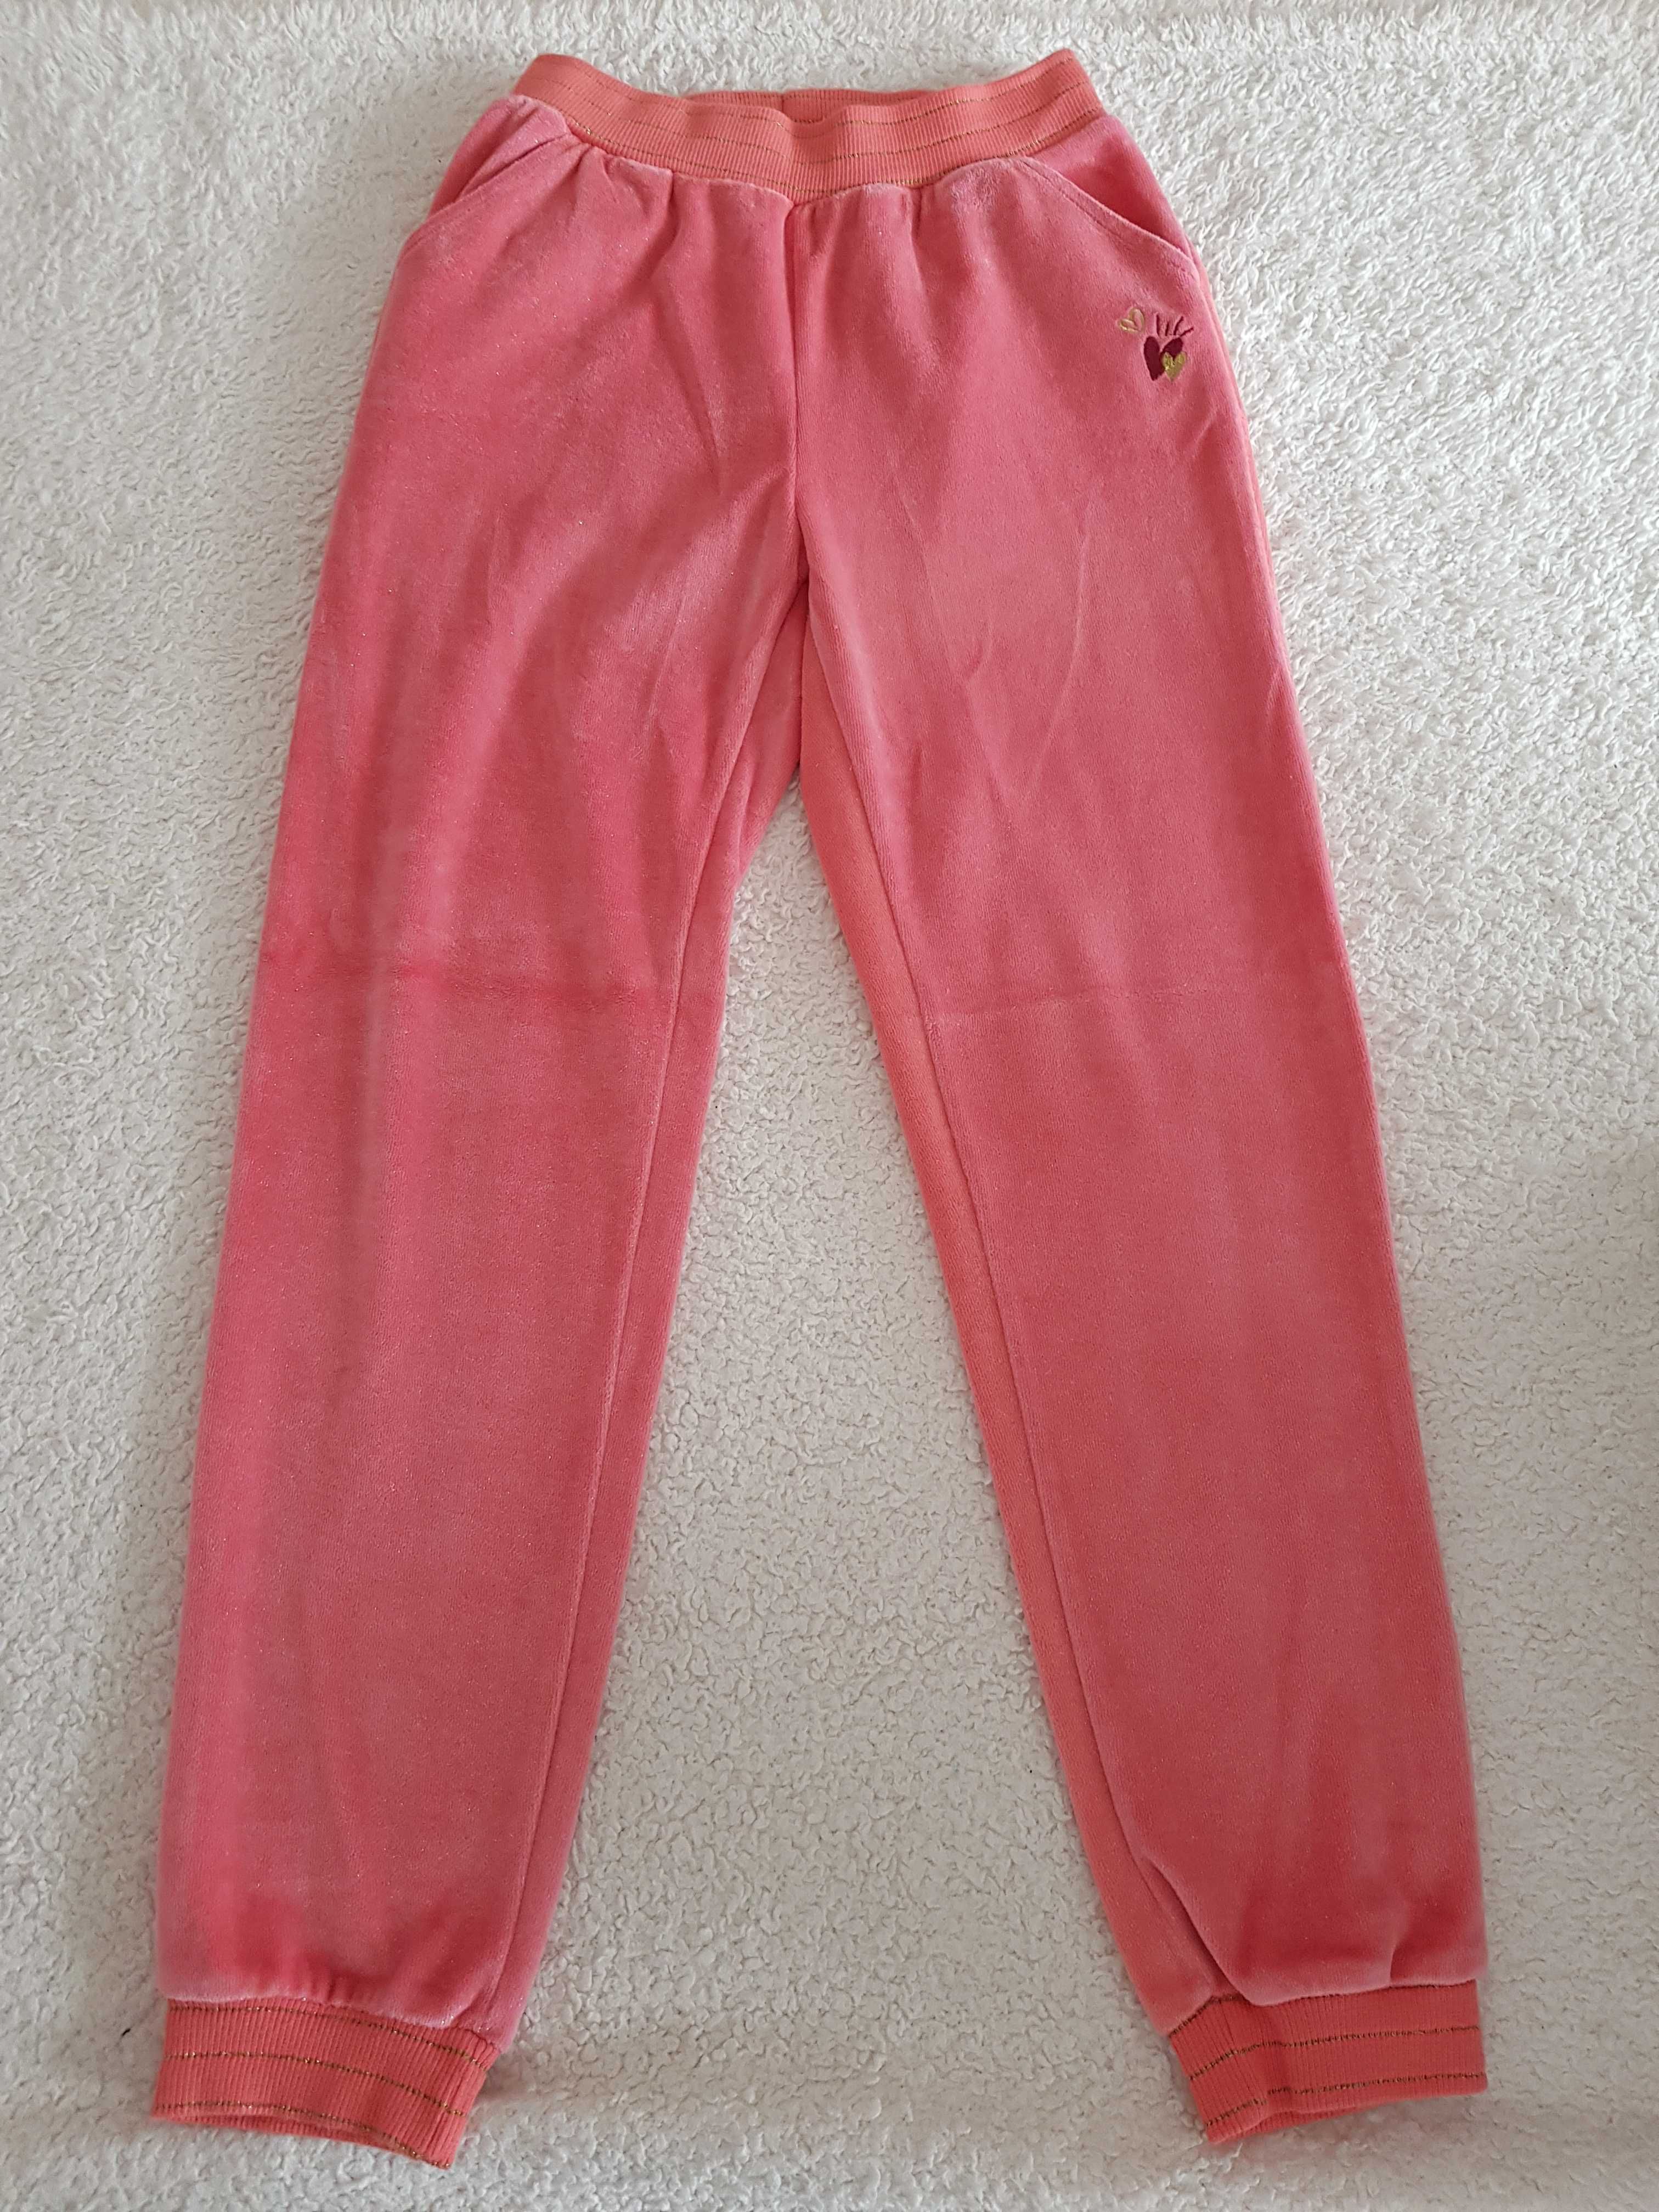 Pantalon NOU trening roz cu sclipici LC Waikiki 134/140